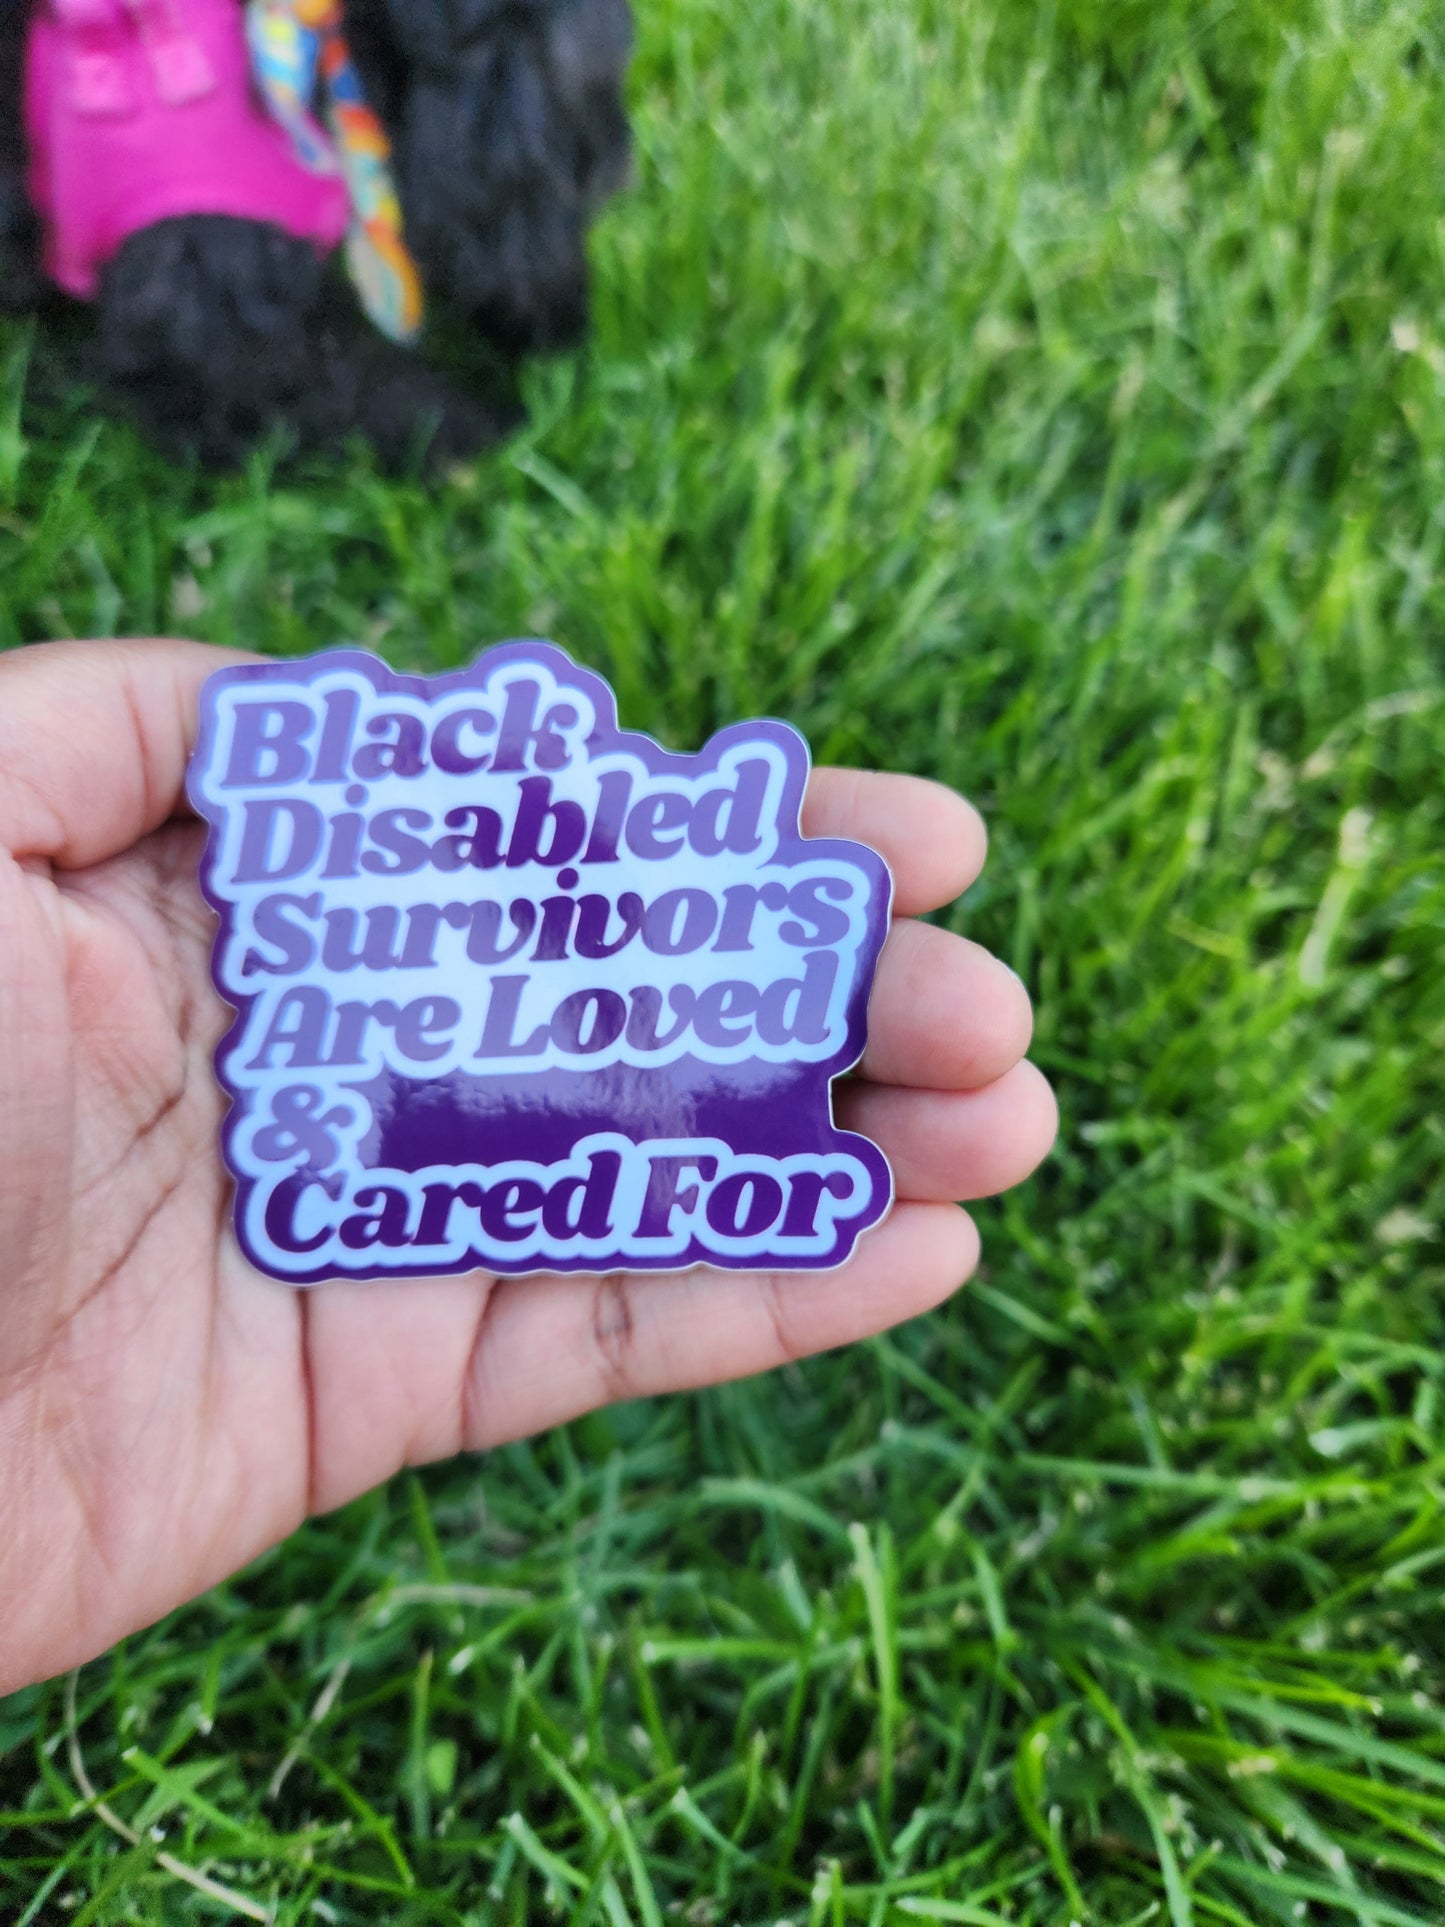 Black Disabled Survivors